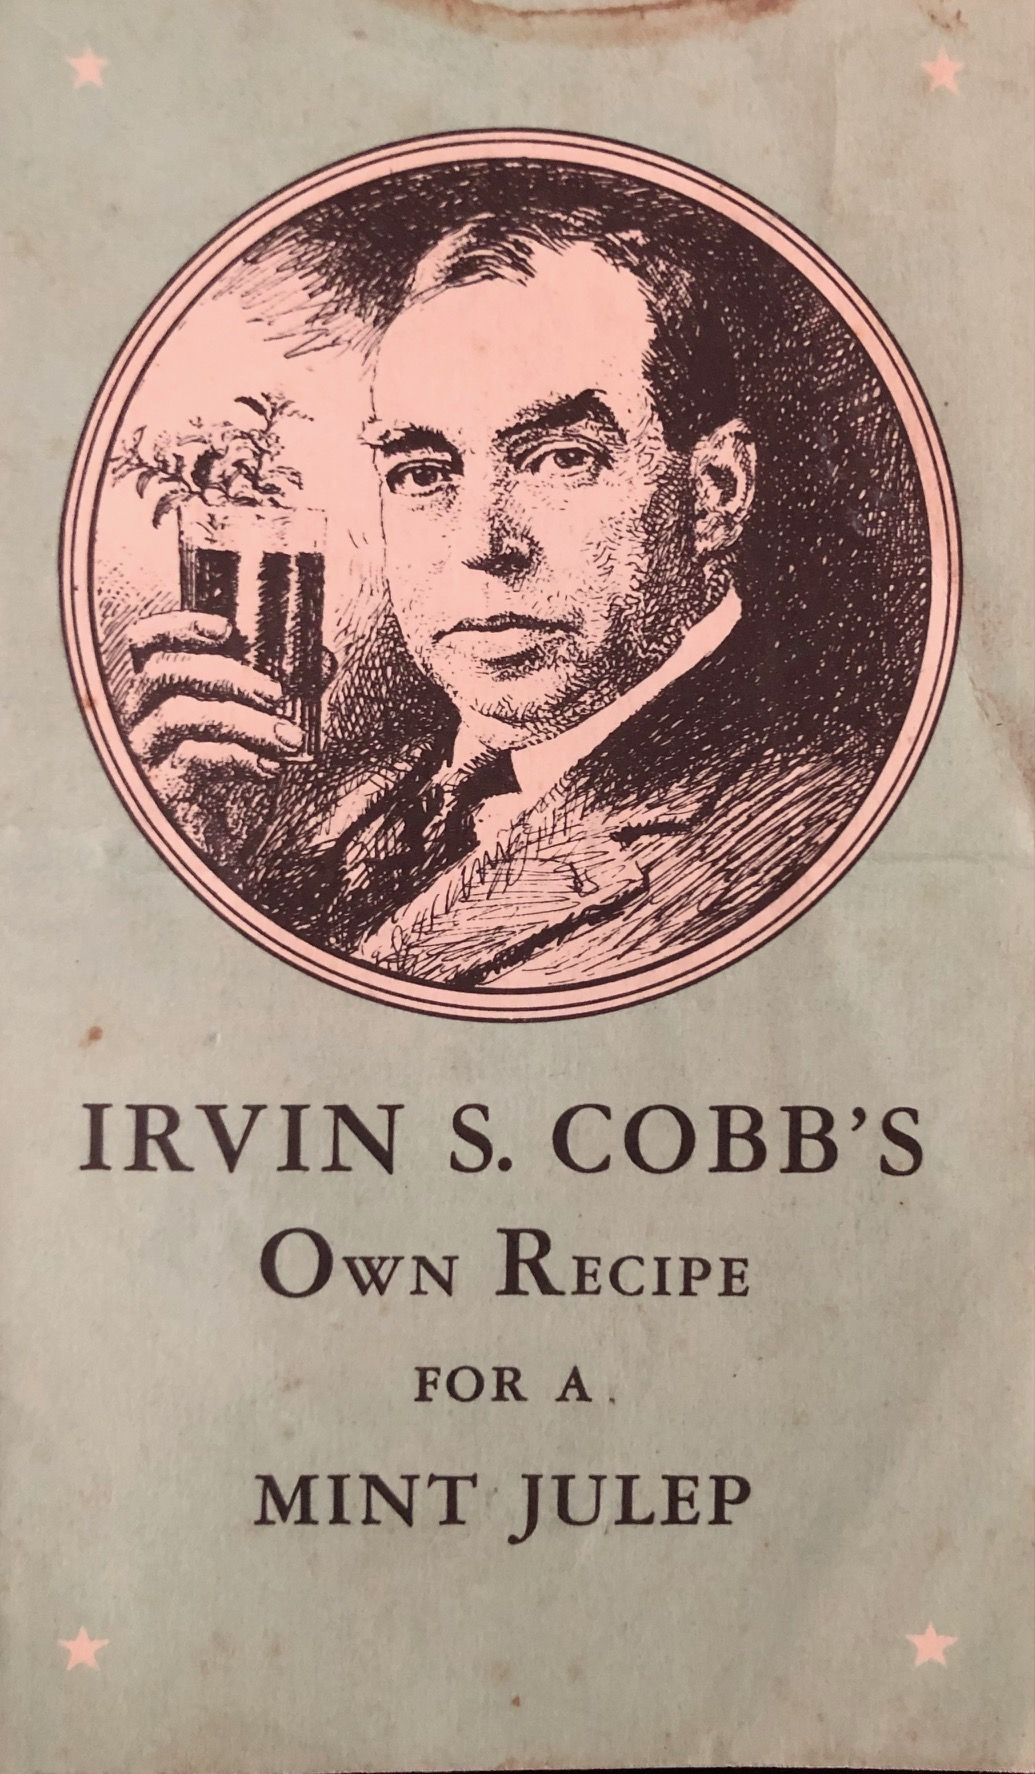 (*NEW ARRIVAL*) (Cocktails - Bourbon) Irvin S. Cobb. Irvin S. Cobb's Own Recipe for a Mint Julep